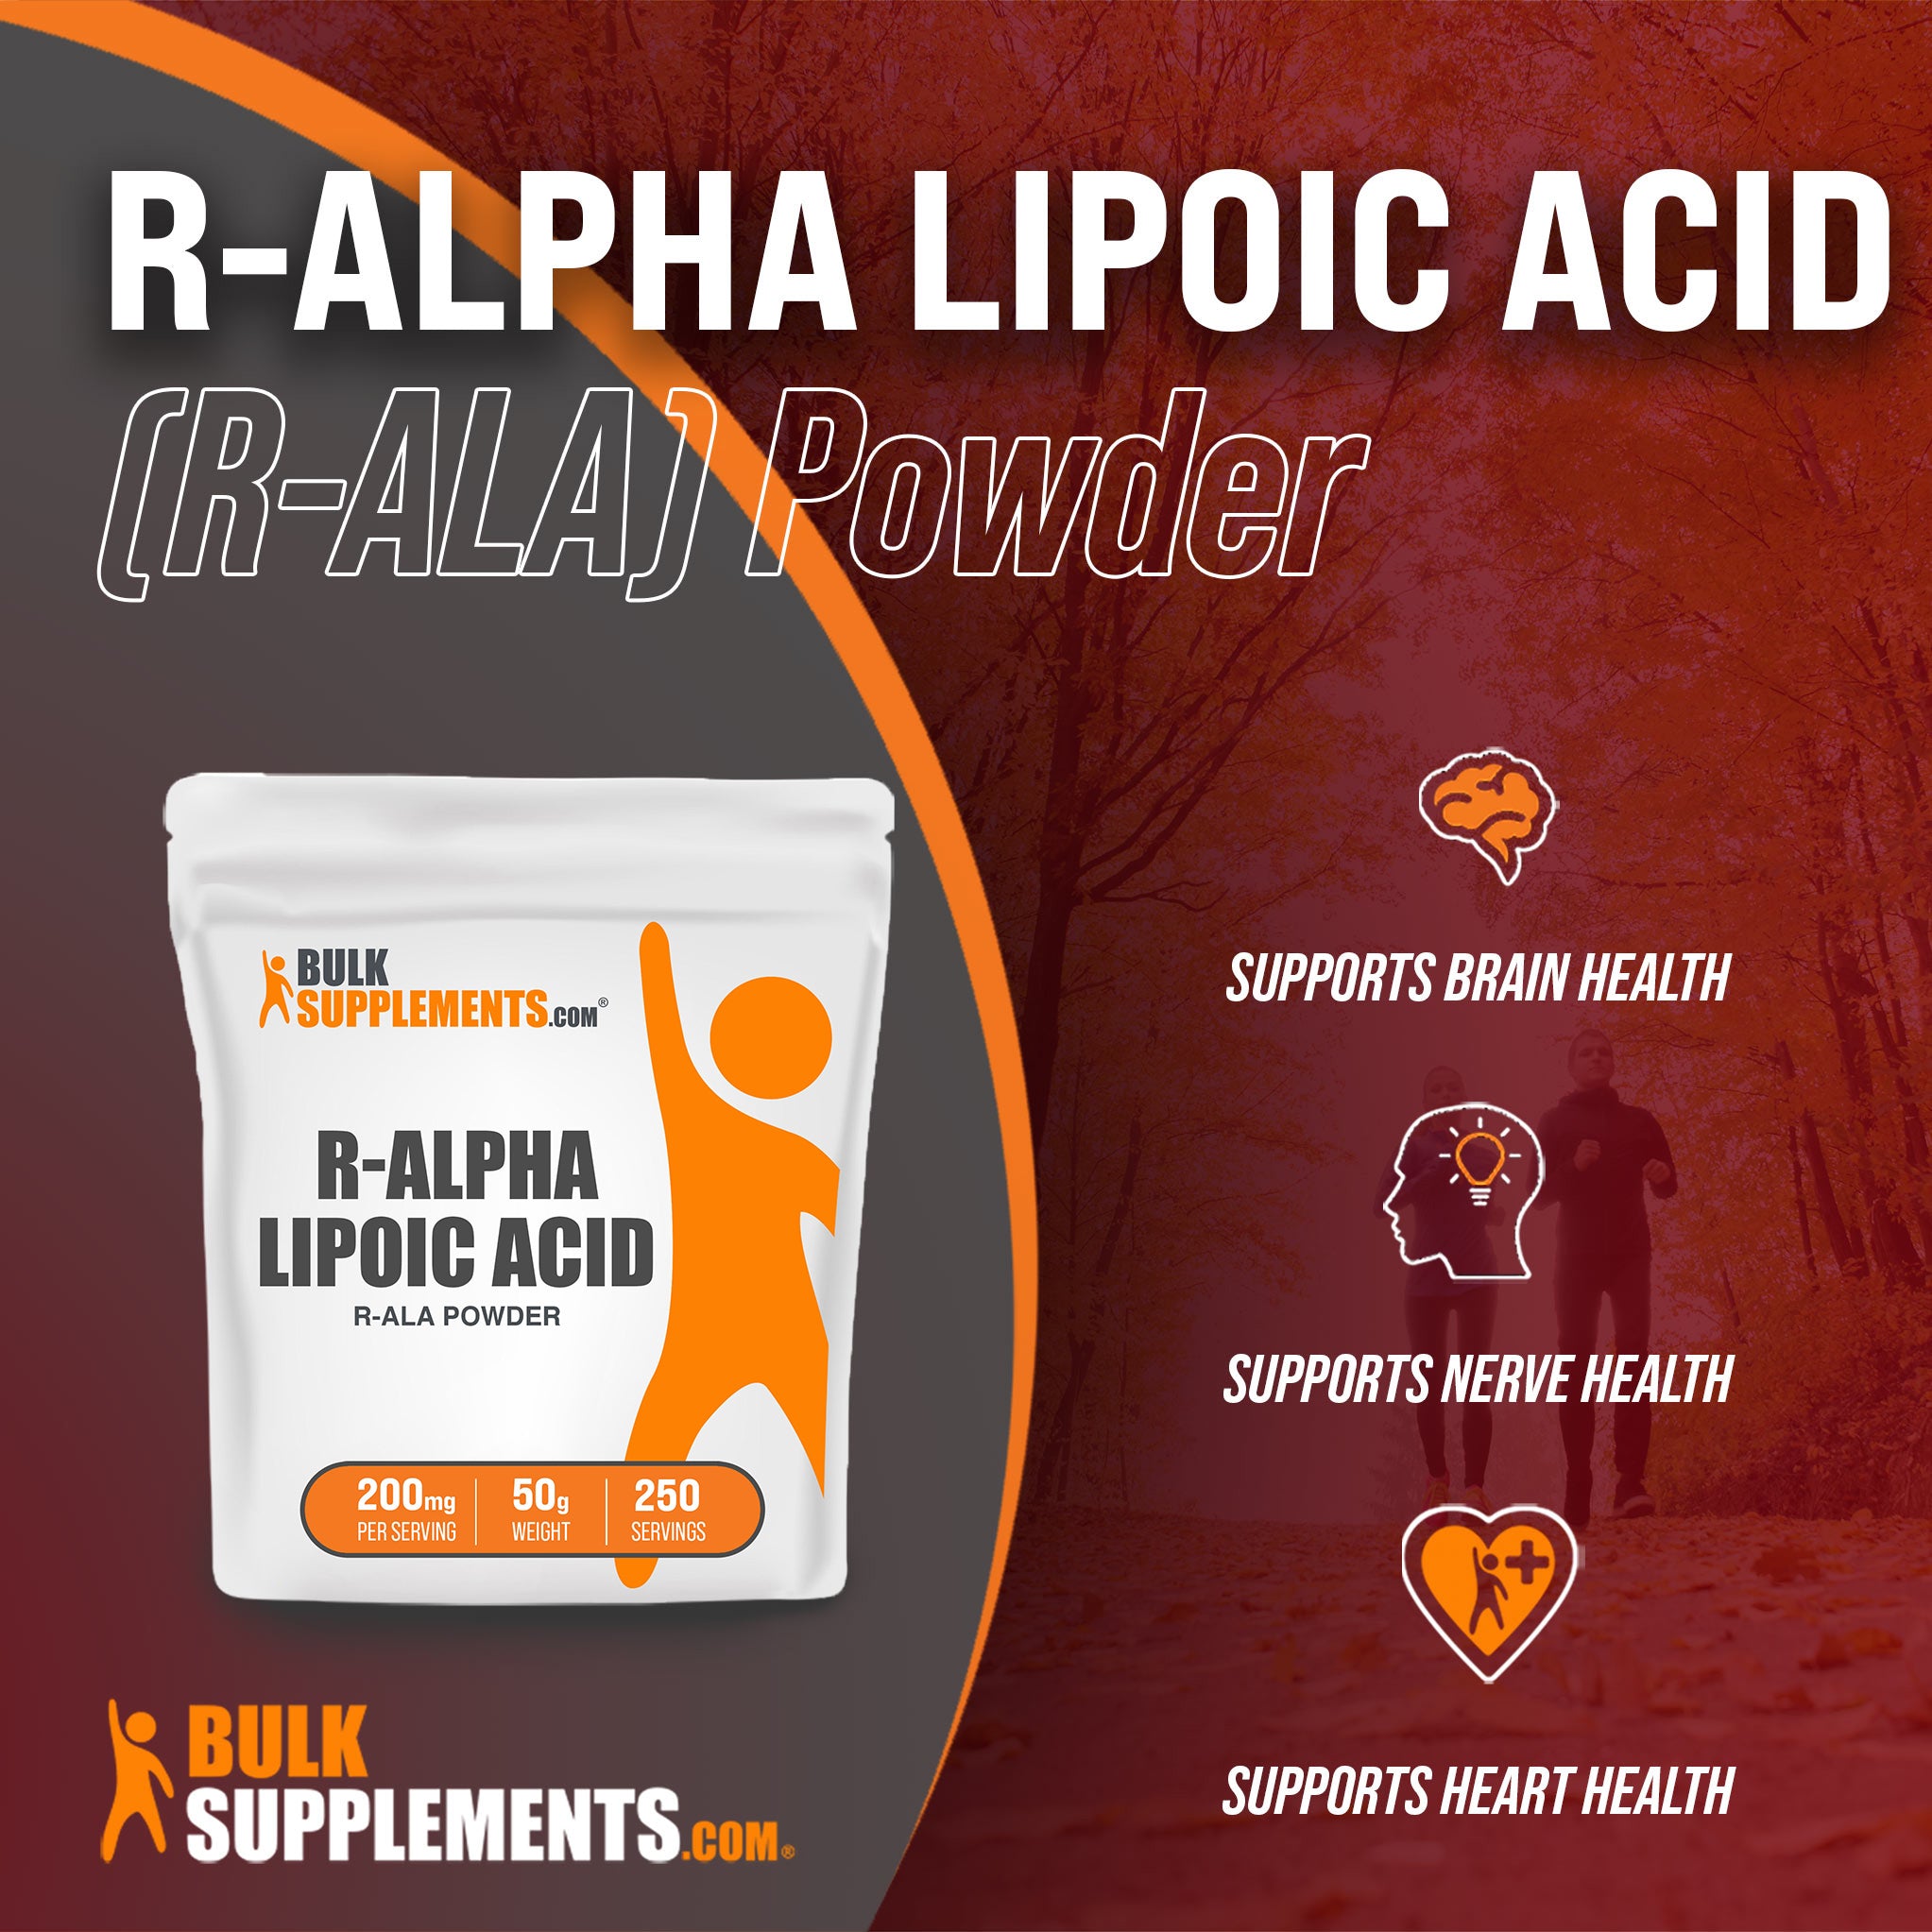 Benefits of R-Alpha Lipoic Acid: supports brain health, supports nerve health, supports heart health